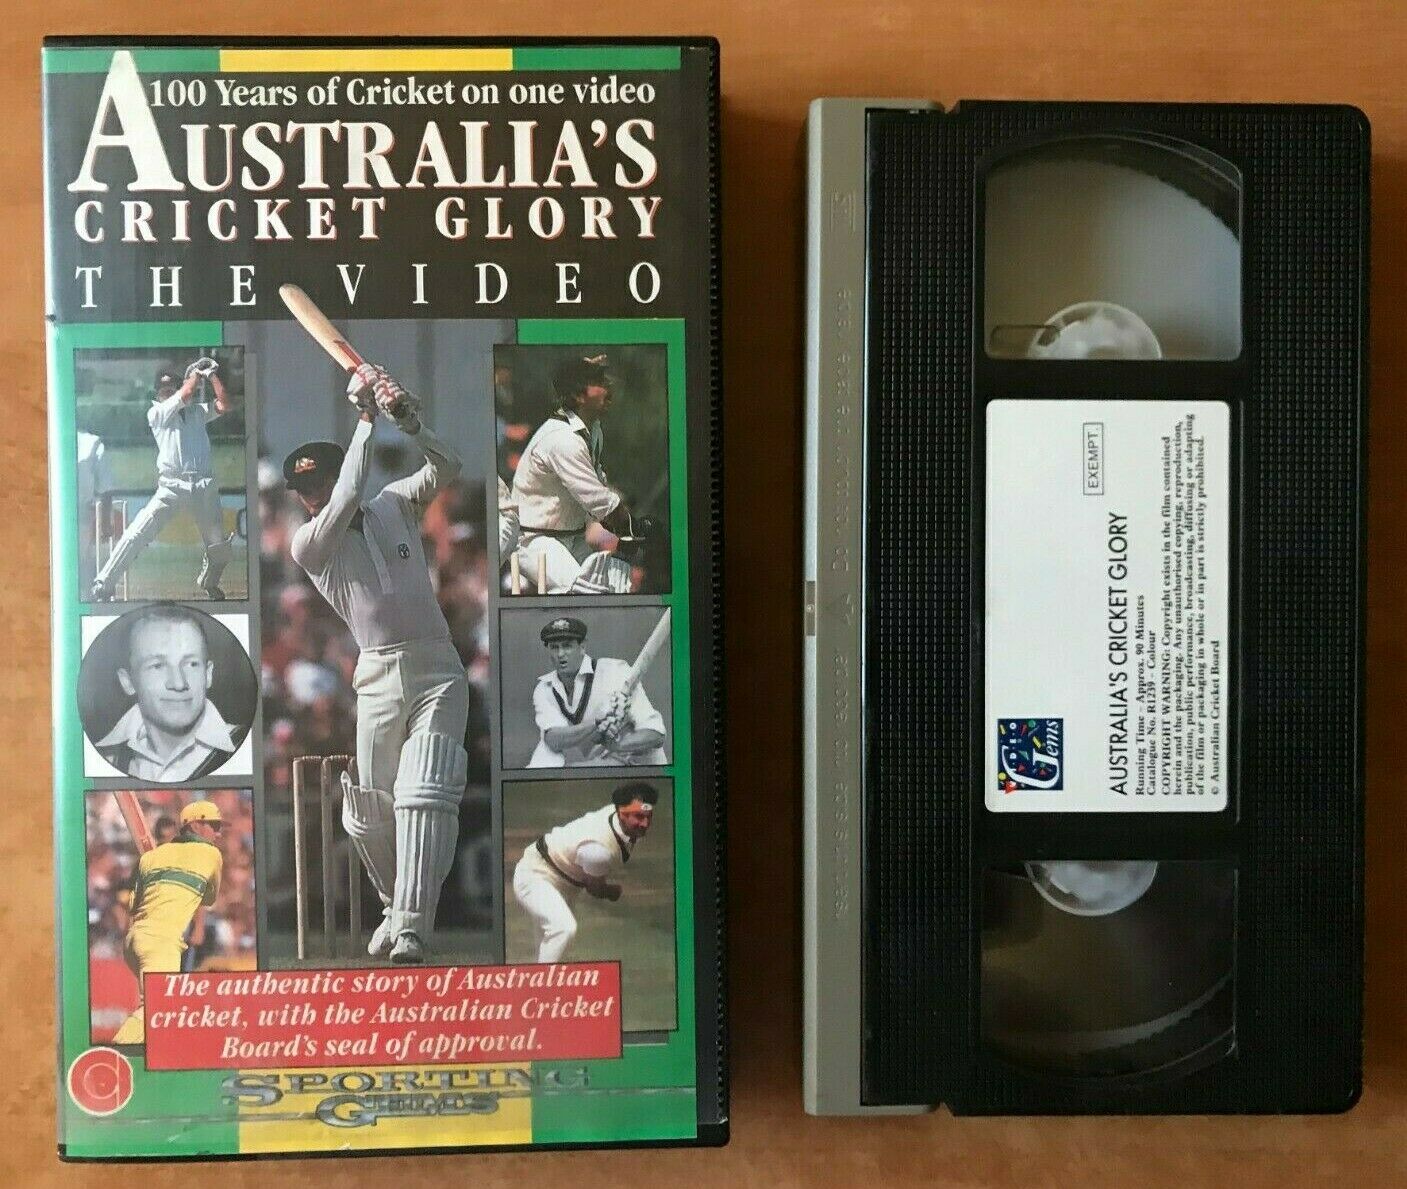 Australia's Cricket Glory (Sporting Gems): Alan Davidson - Greg Chappell - VHS-